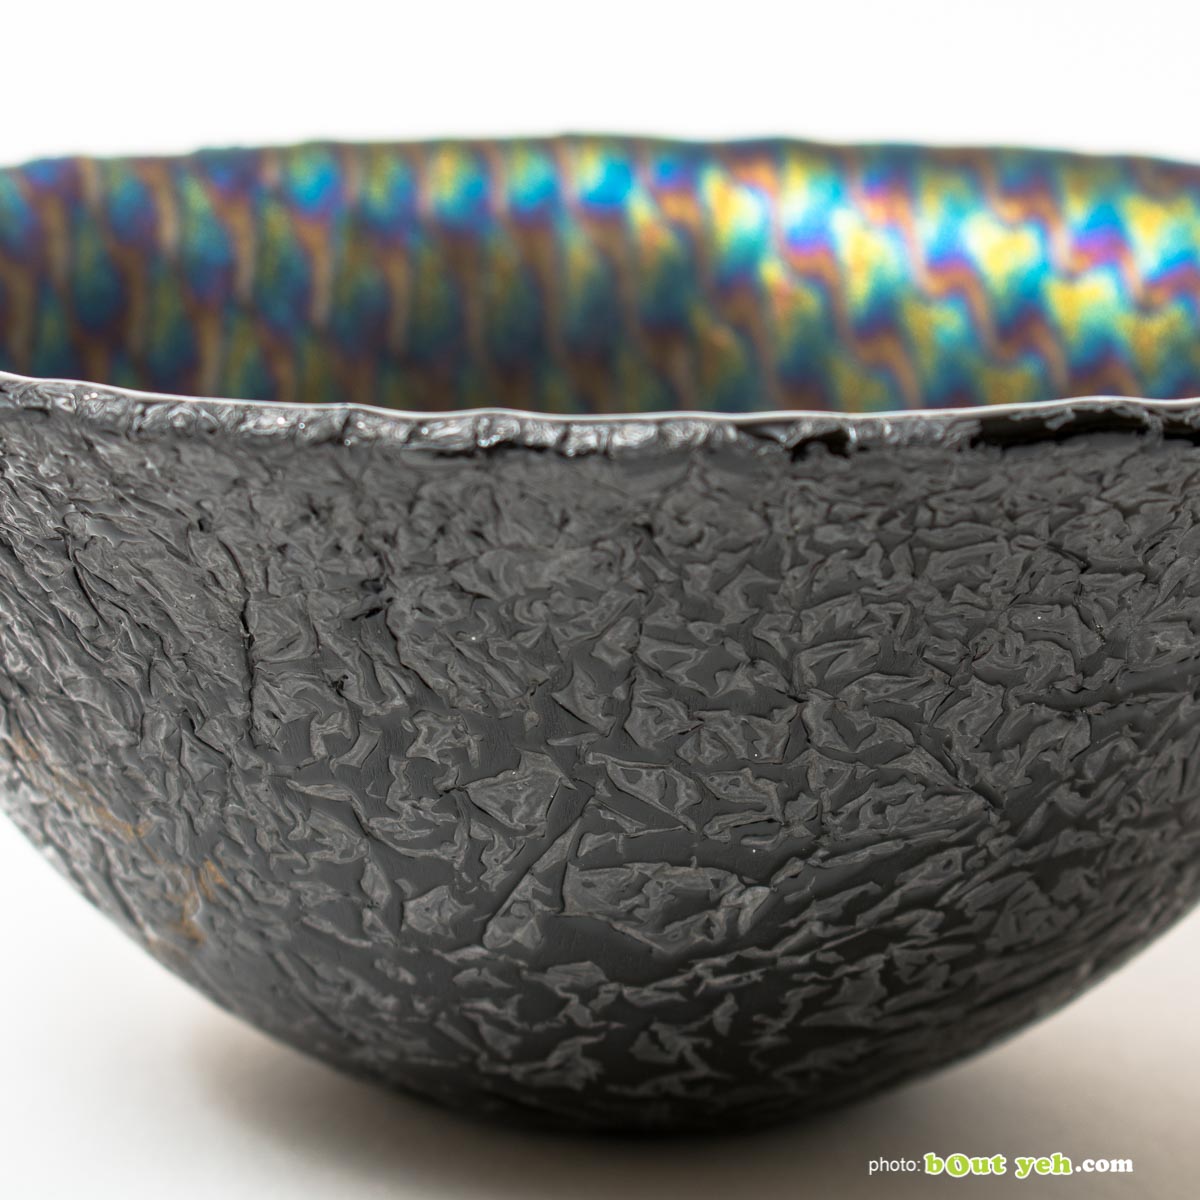 Iridised peacock pattern black glass bowl, hand made by Keith Sheppard Irish glassware - photo 1549